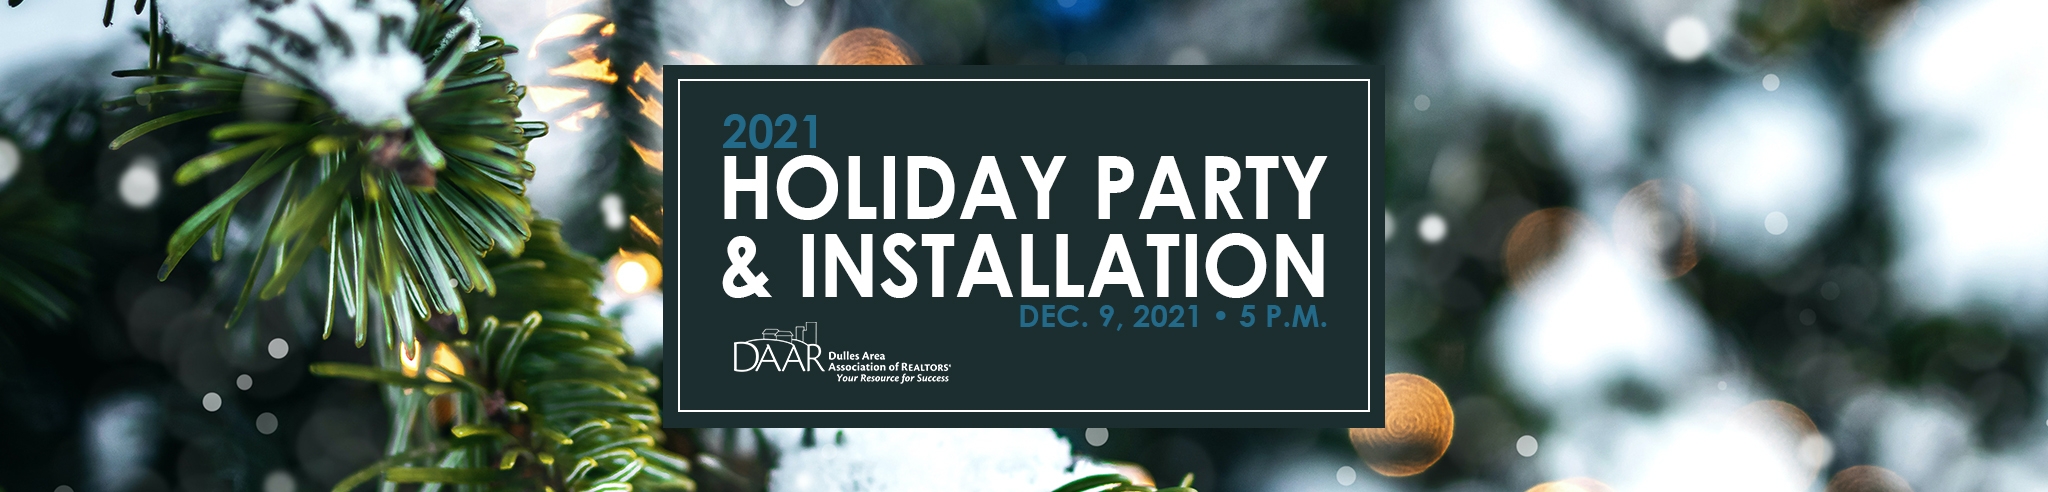 2021 Holiday Party & Installation Post Thumbnail